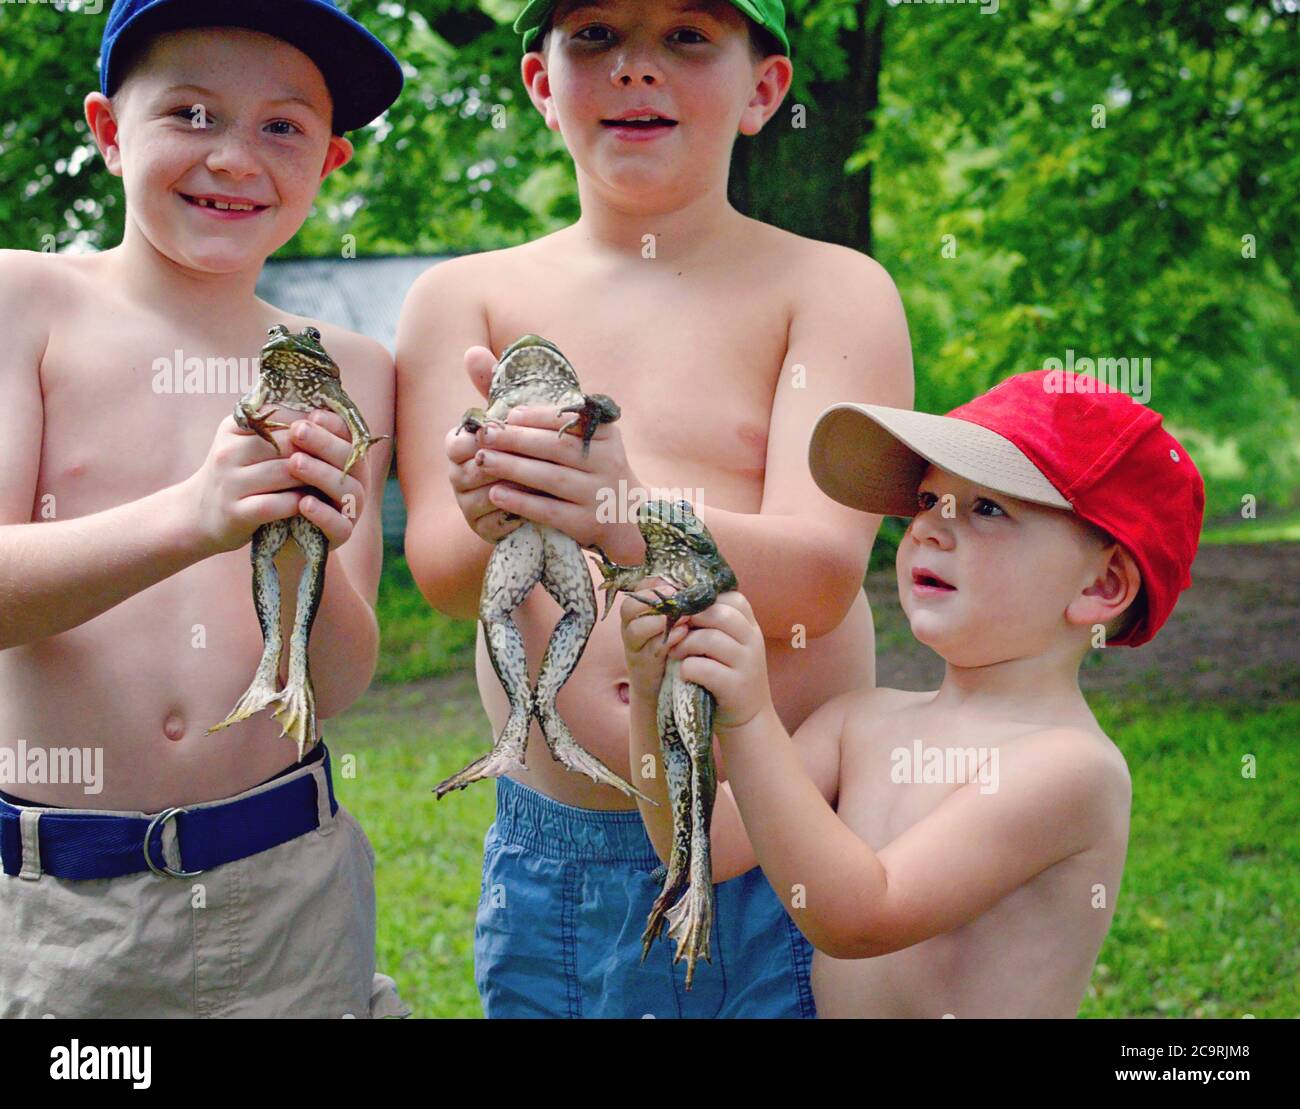 Three boys with baseball caps on holding bullfrogs Stock Photo